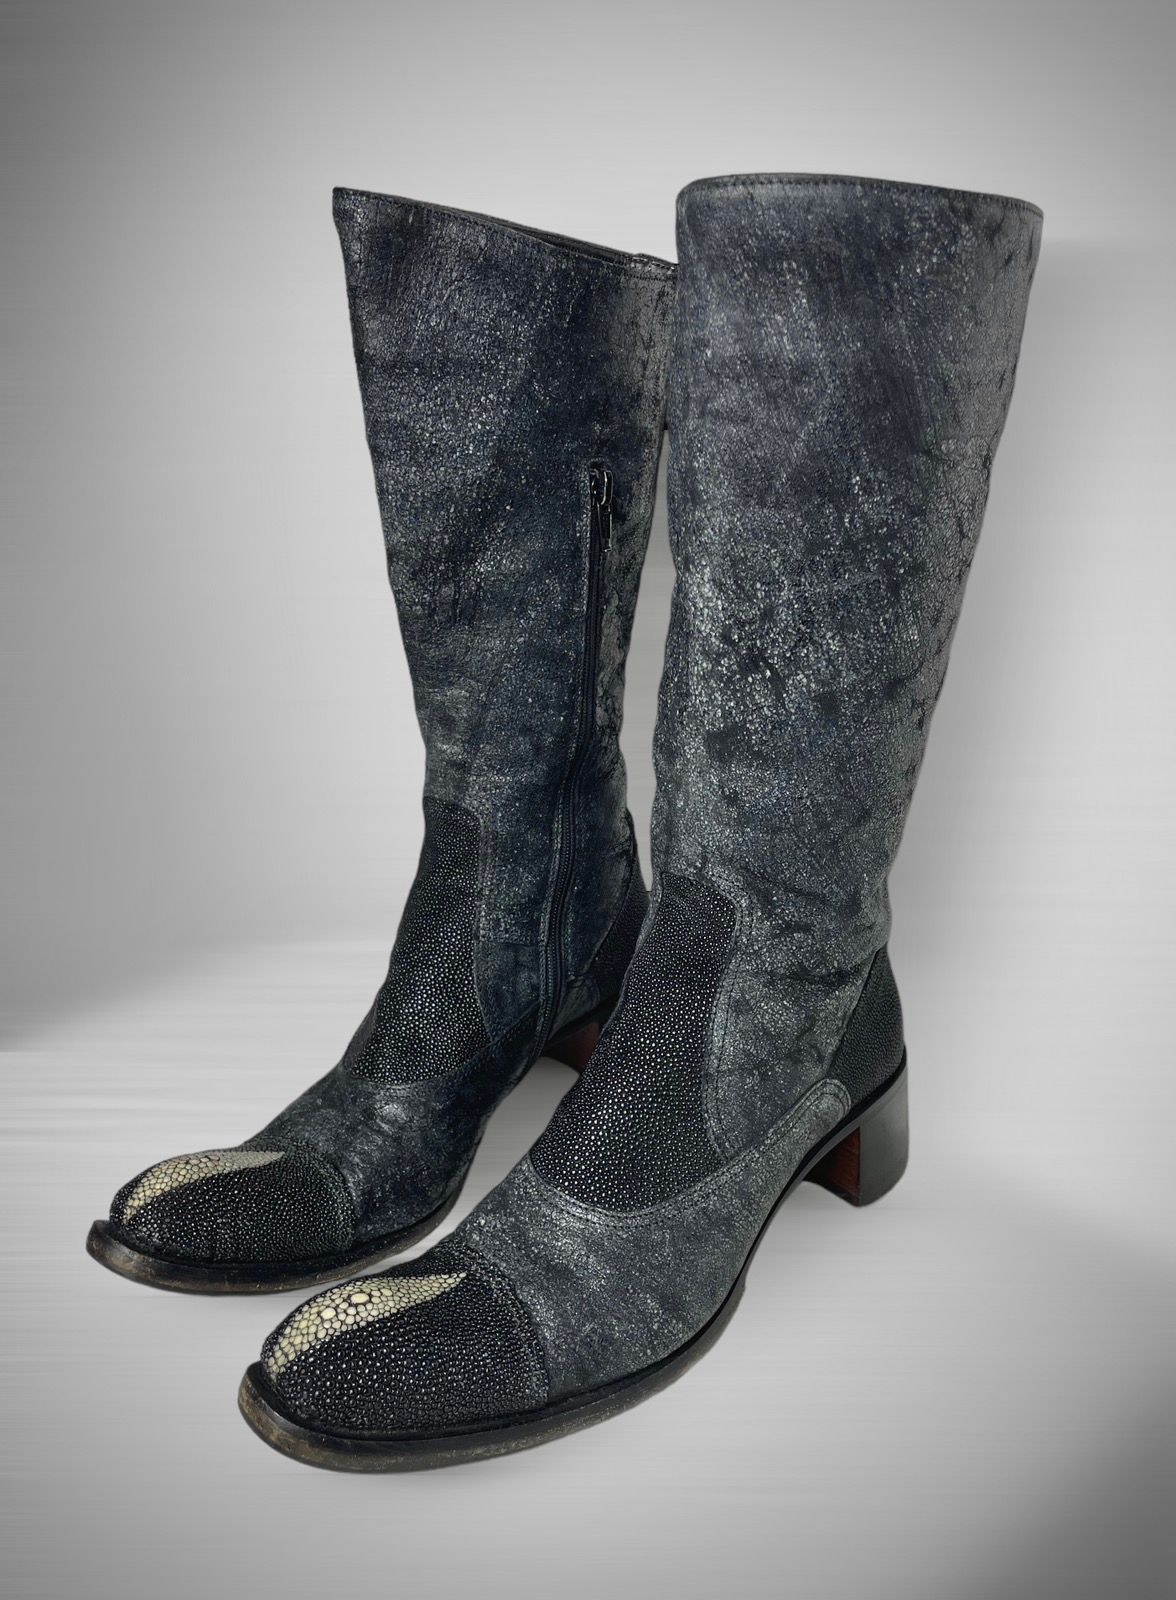 Gianni Barbato Vintage Gianni Barbato cowboy western Boots genuine leather Size US 6 / IT 36 - 2 Preview